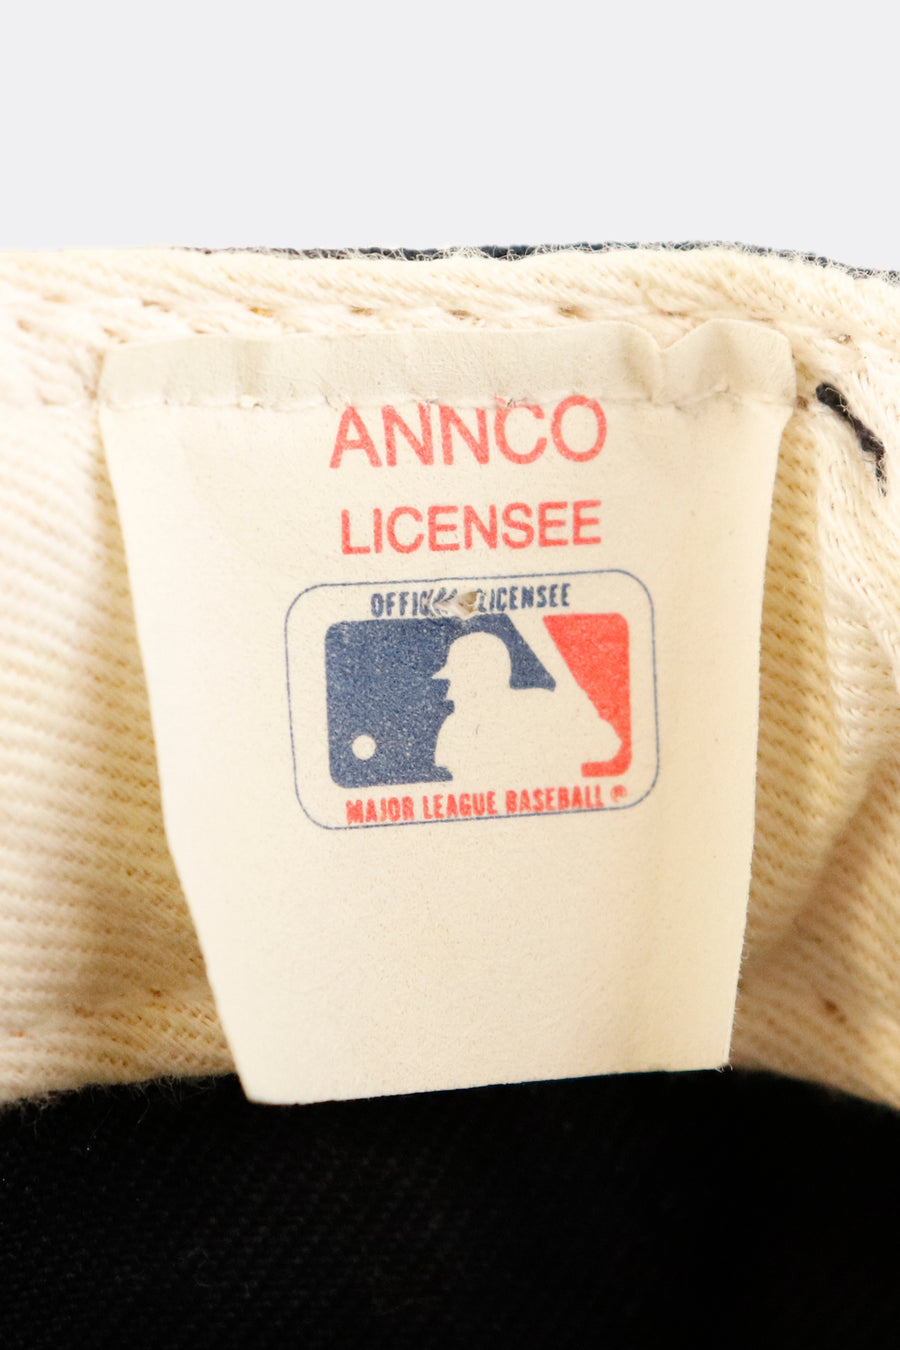 Vintage MLB Los Angeles Angels Embroidered Logo Snapback Hat